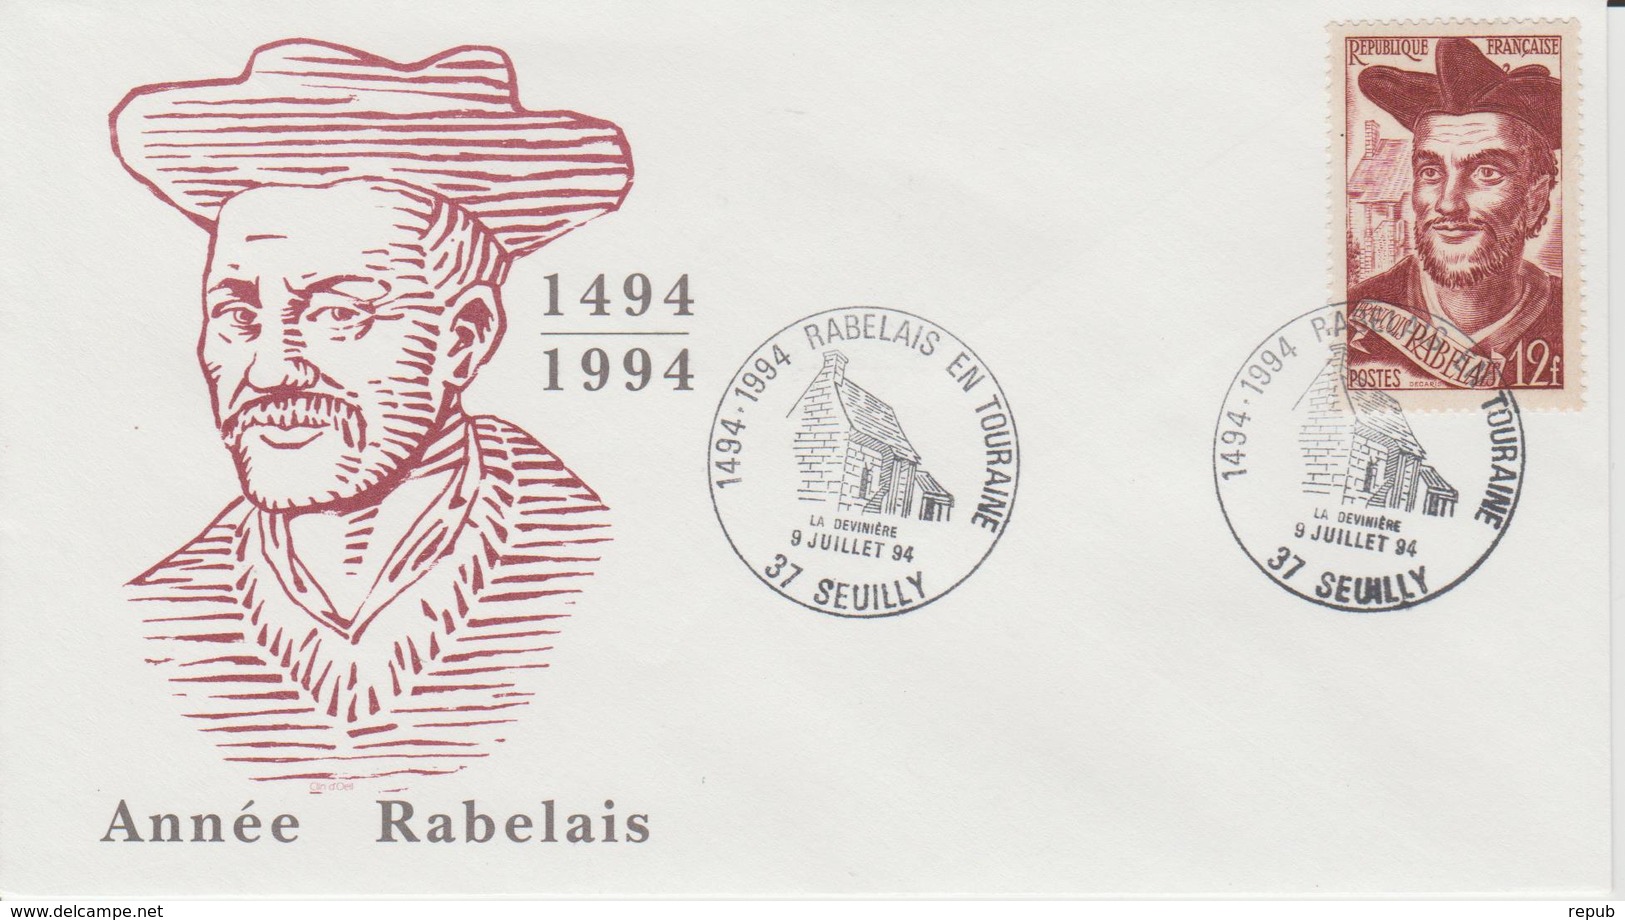 France 1994 Seuilly 37 Année Rabelais - Commemorative Postmarks